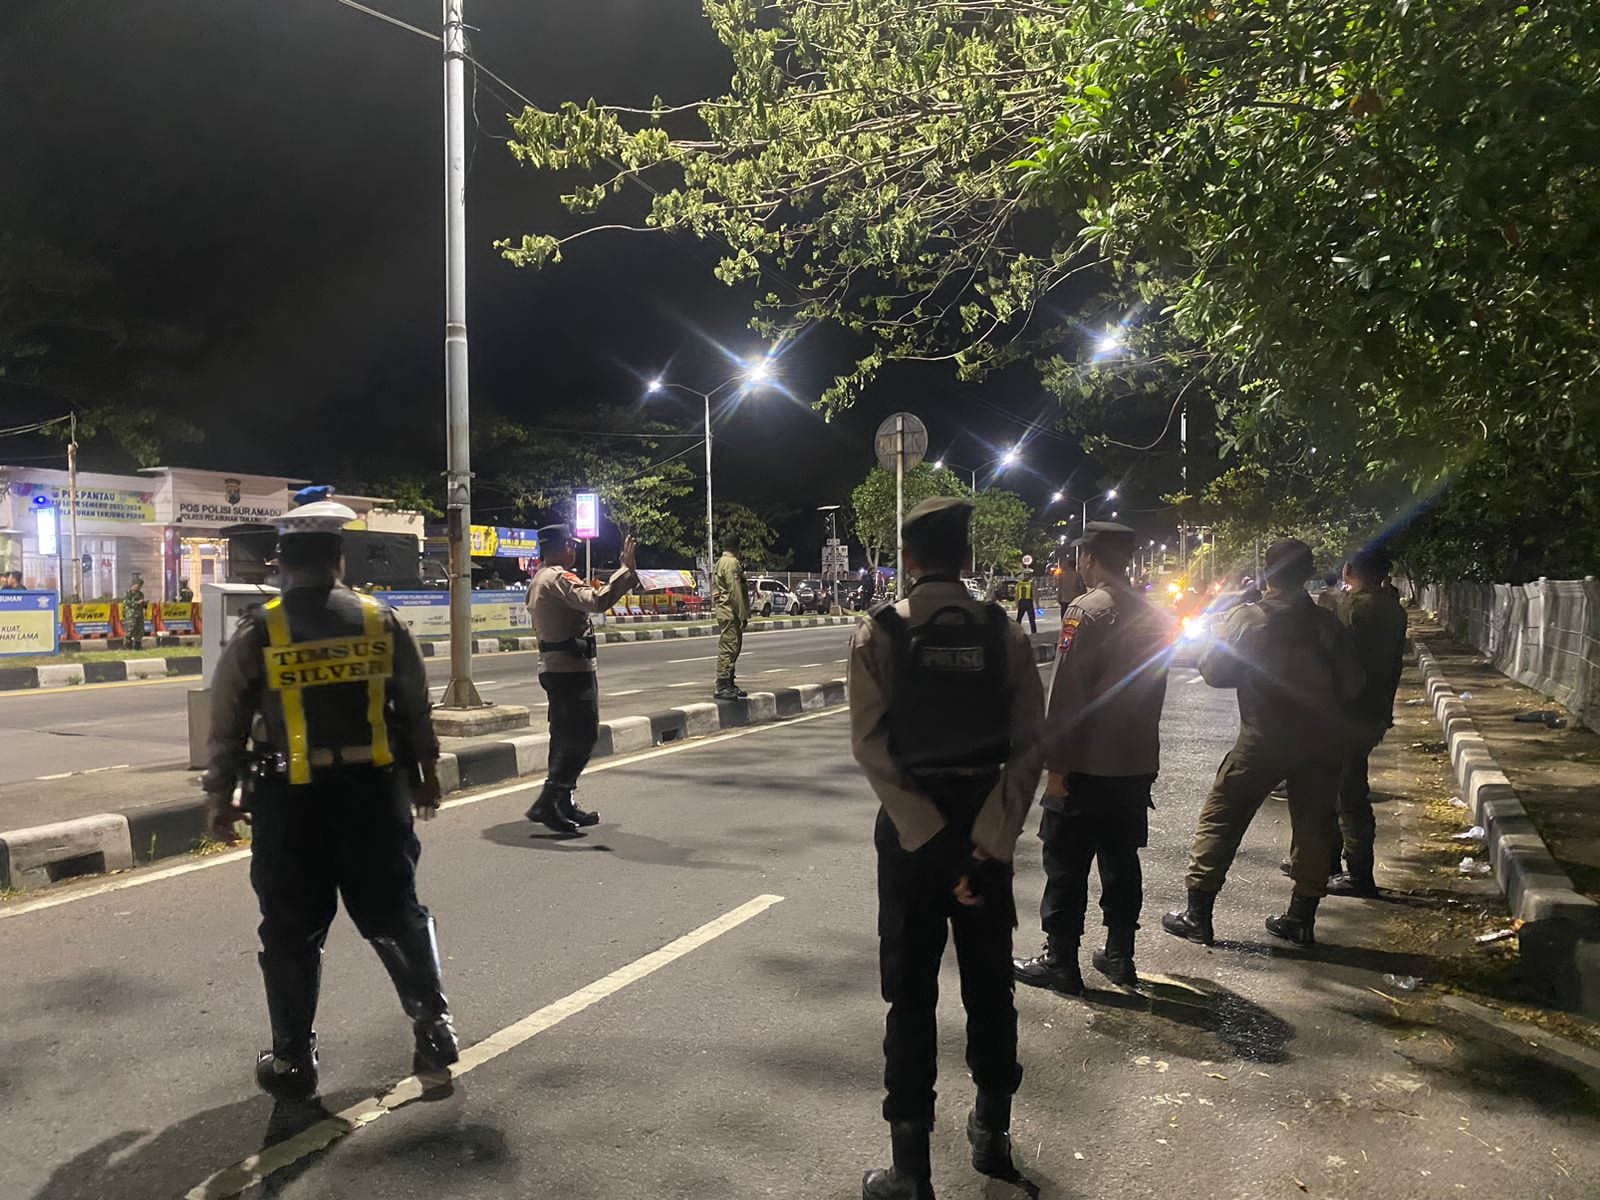 Patroli Polres Pelabuhan Tanjung Perak Amankan Ranmor Bodong hingga Narkoba